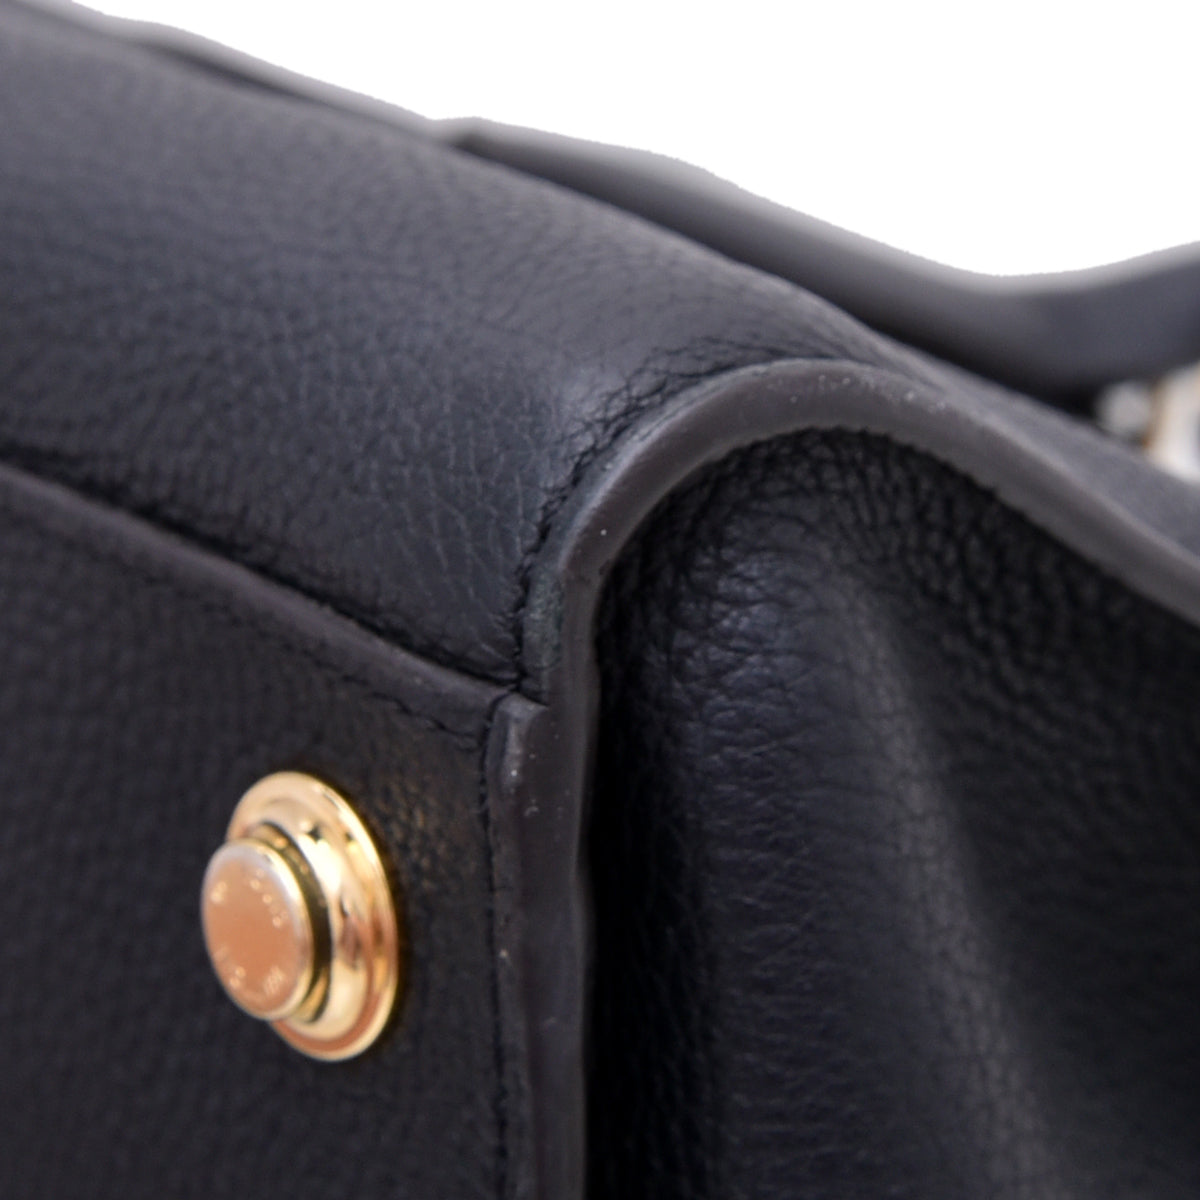 Louis Vuitton Black City Steamer PM Bag – The Closet